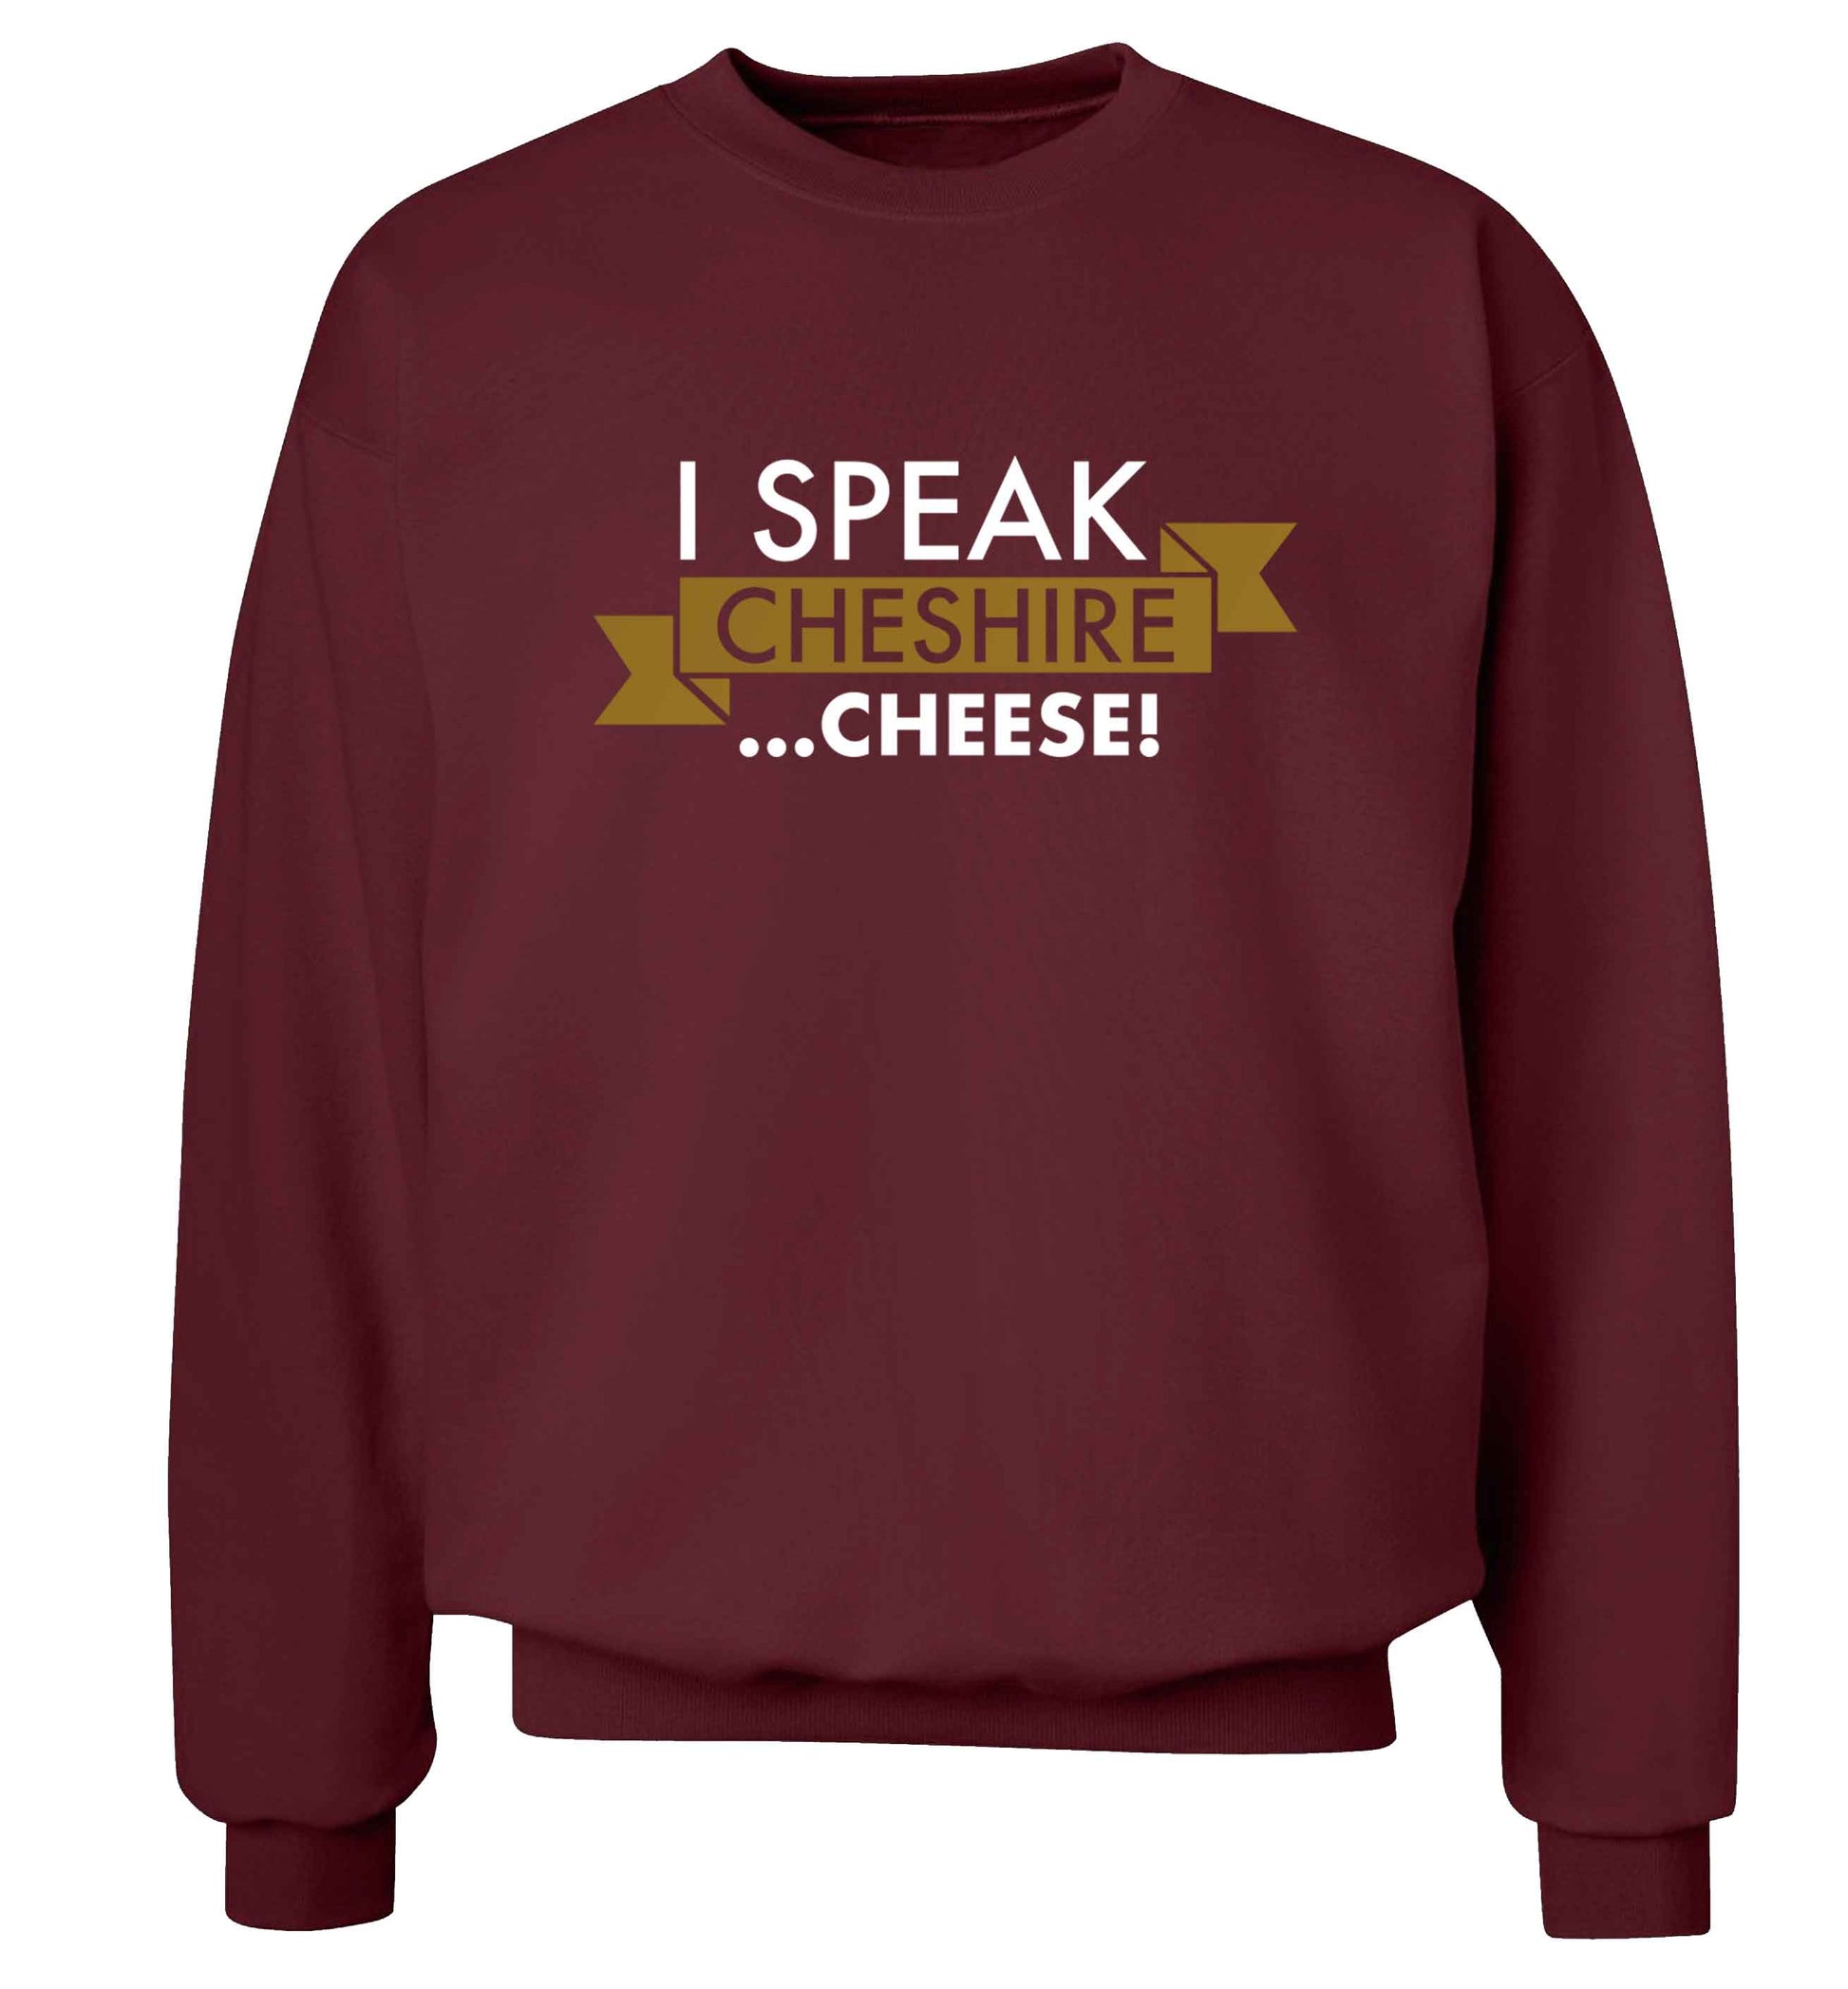 I speak Cheshire cheese Adult's unisex maroon Sweater 2XL